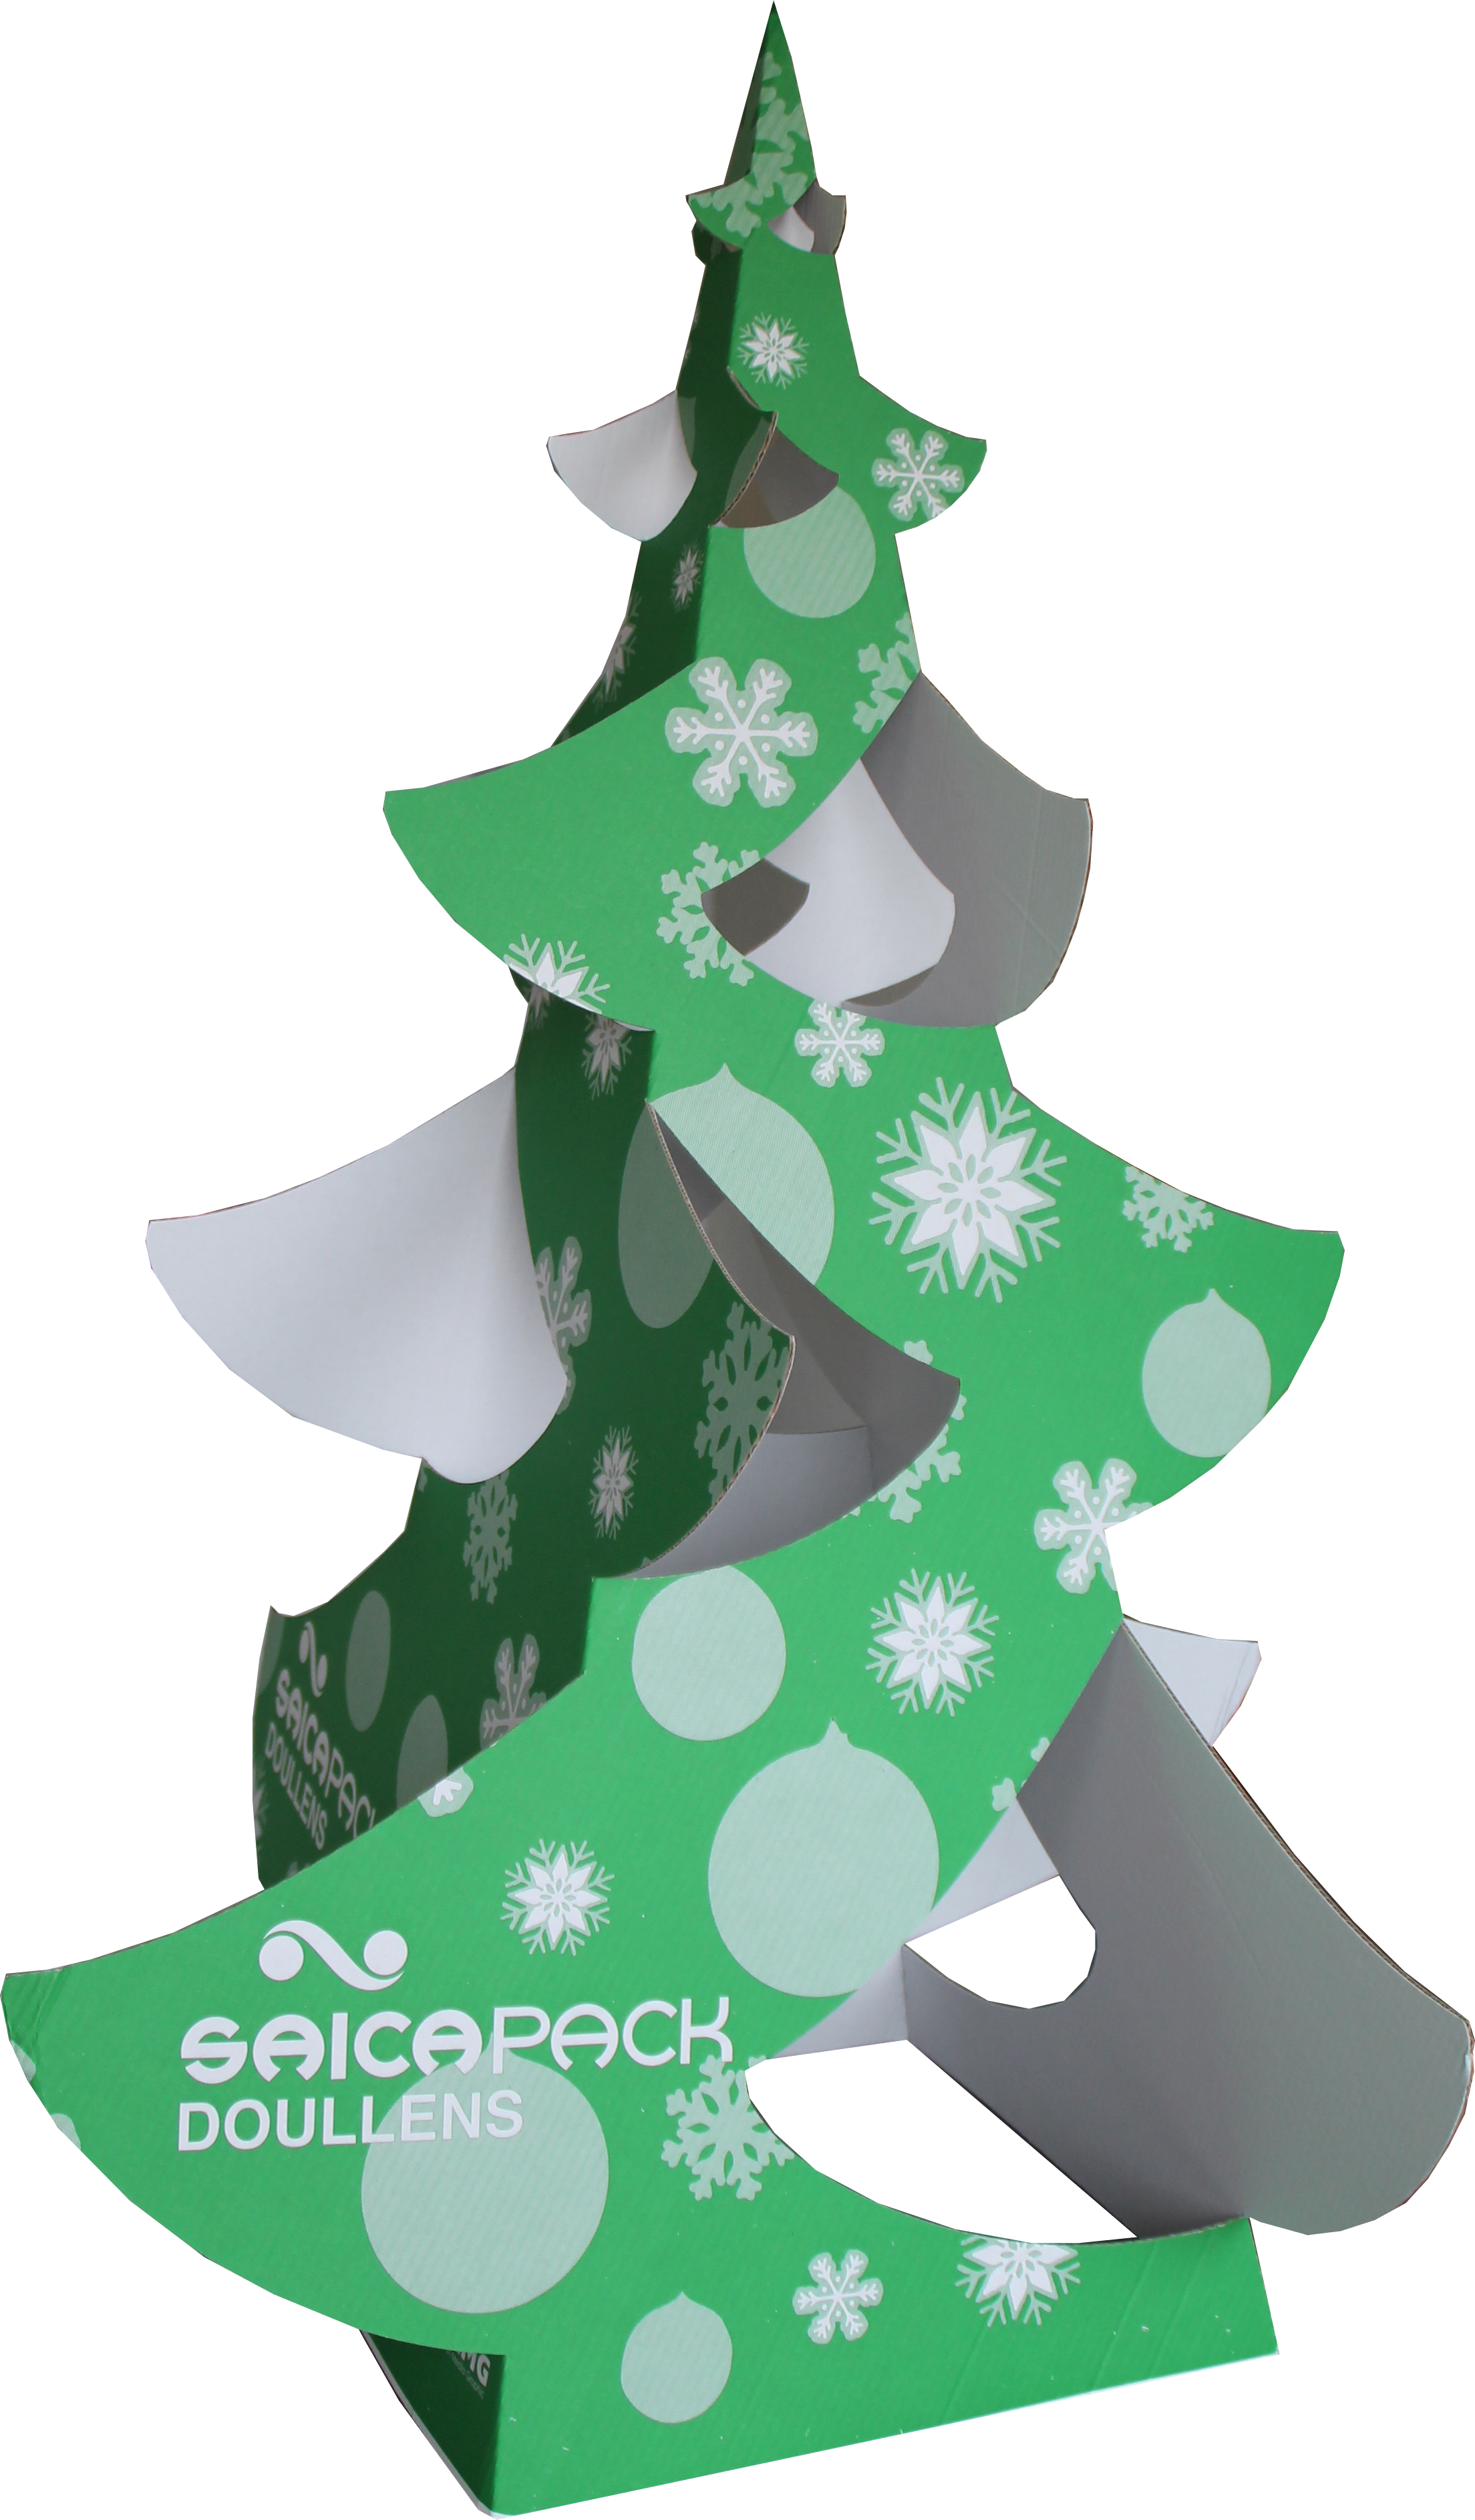 Saica Pack Doullens Christmas Tree - Christmas Tree (2208x3773)